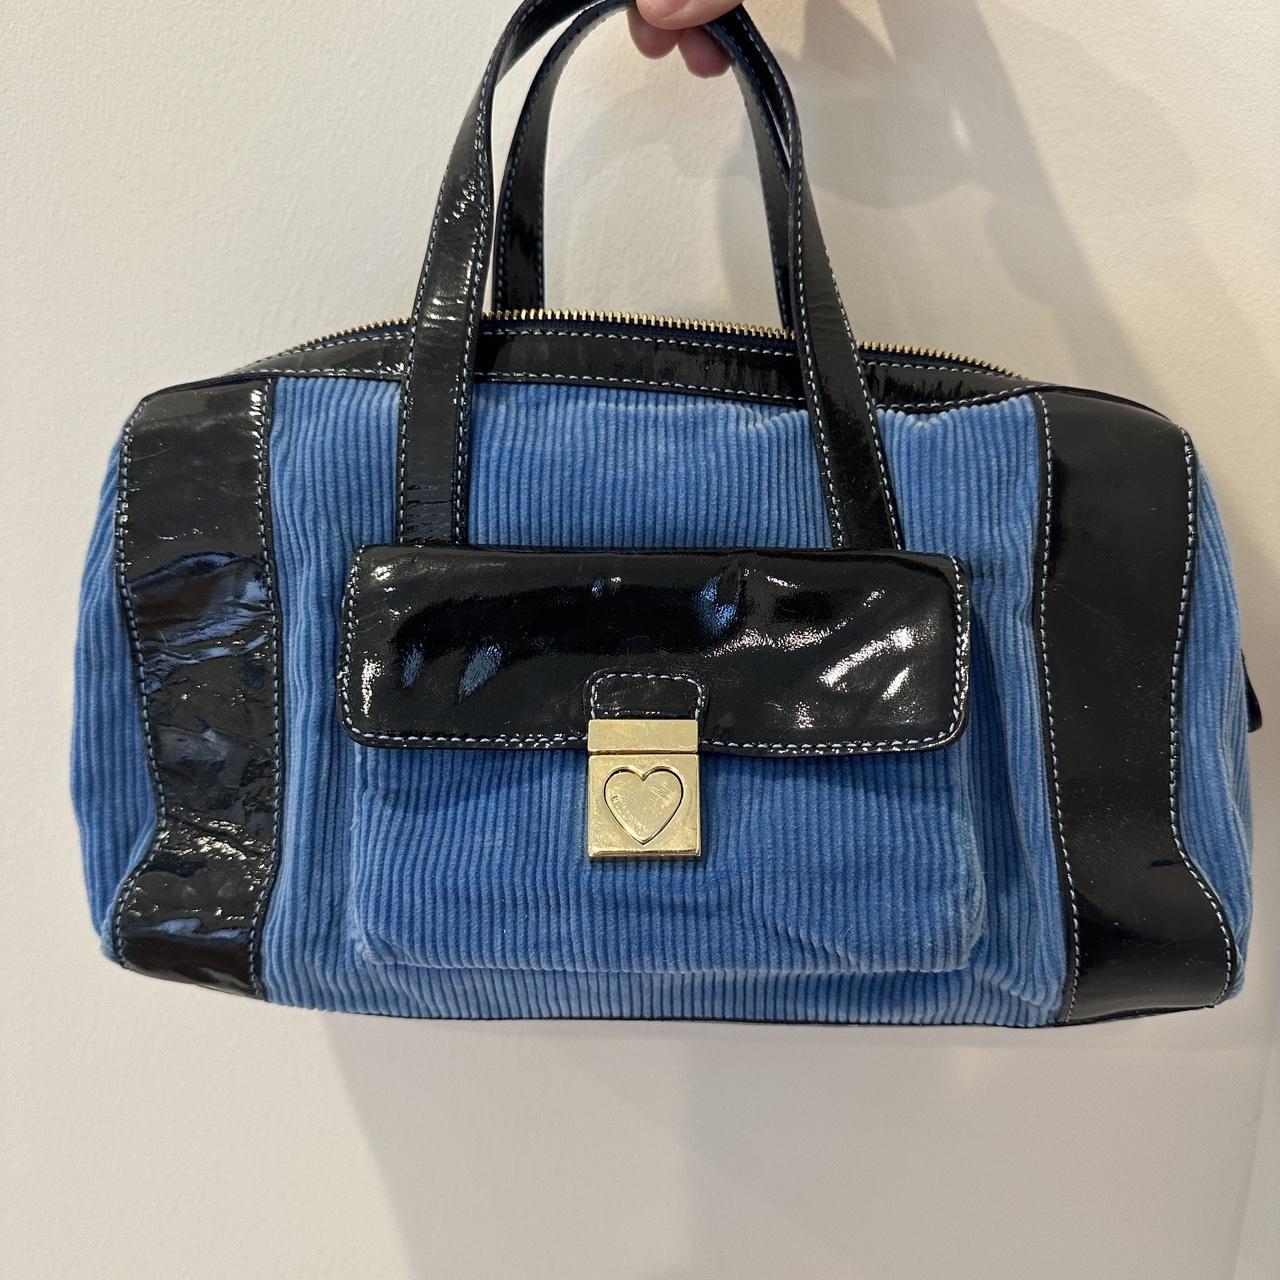 Moschino Cheap & Chic Women's Blue and Black Bag